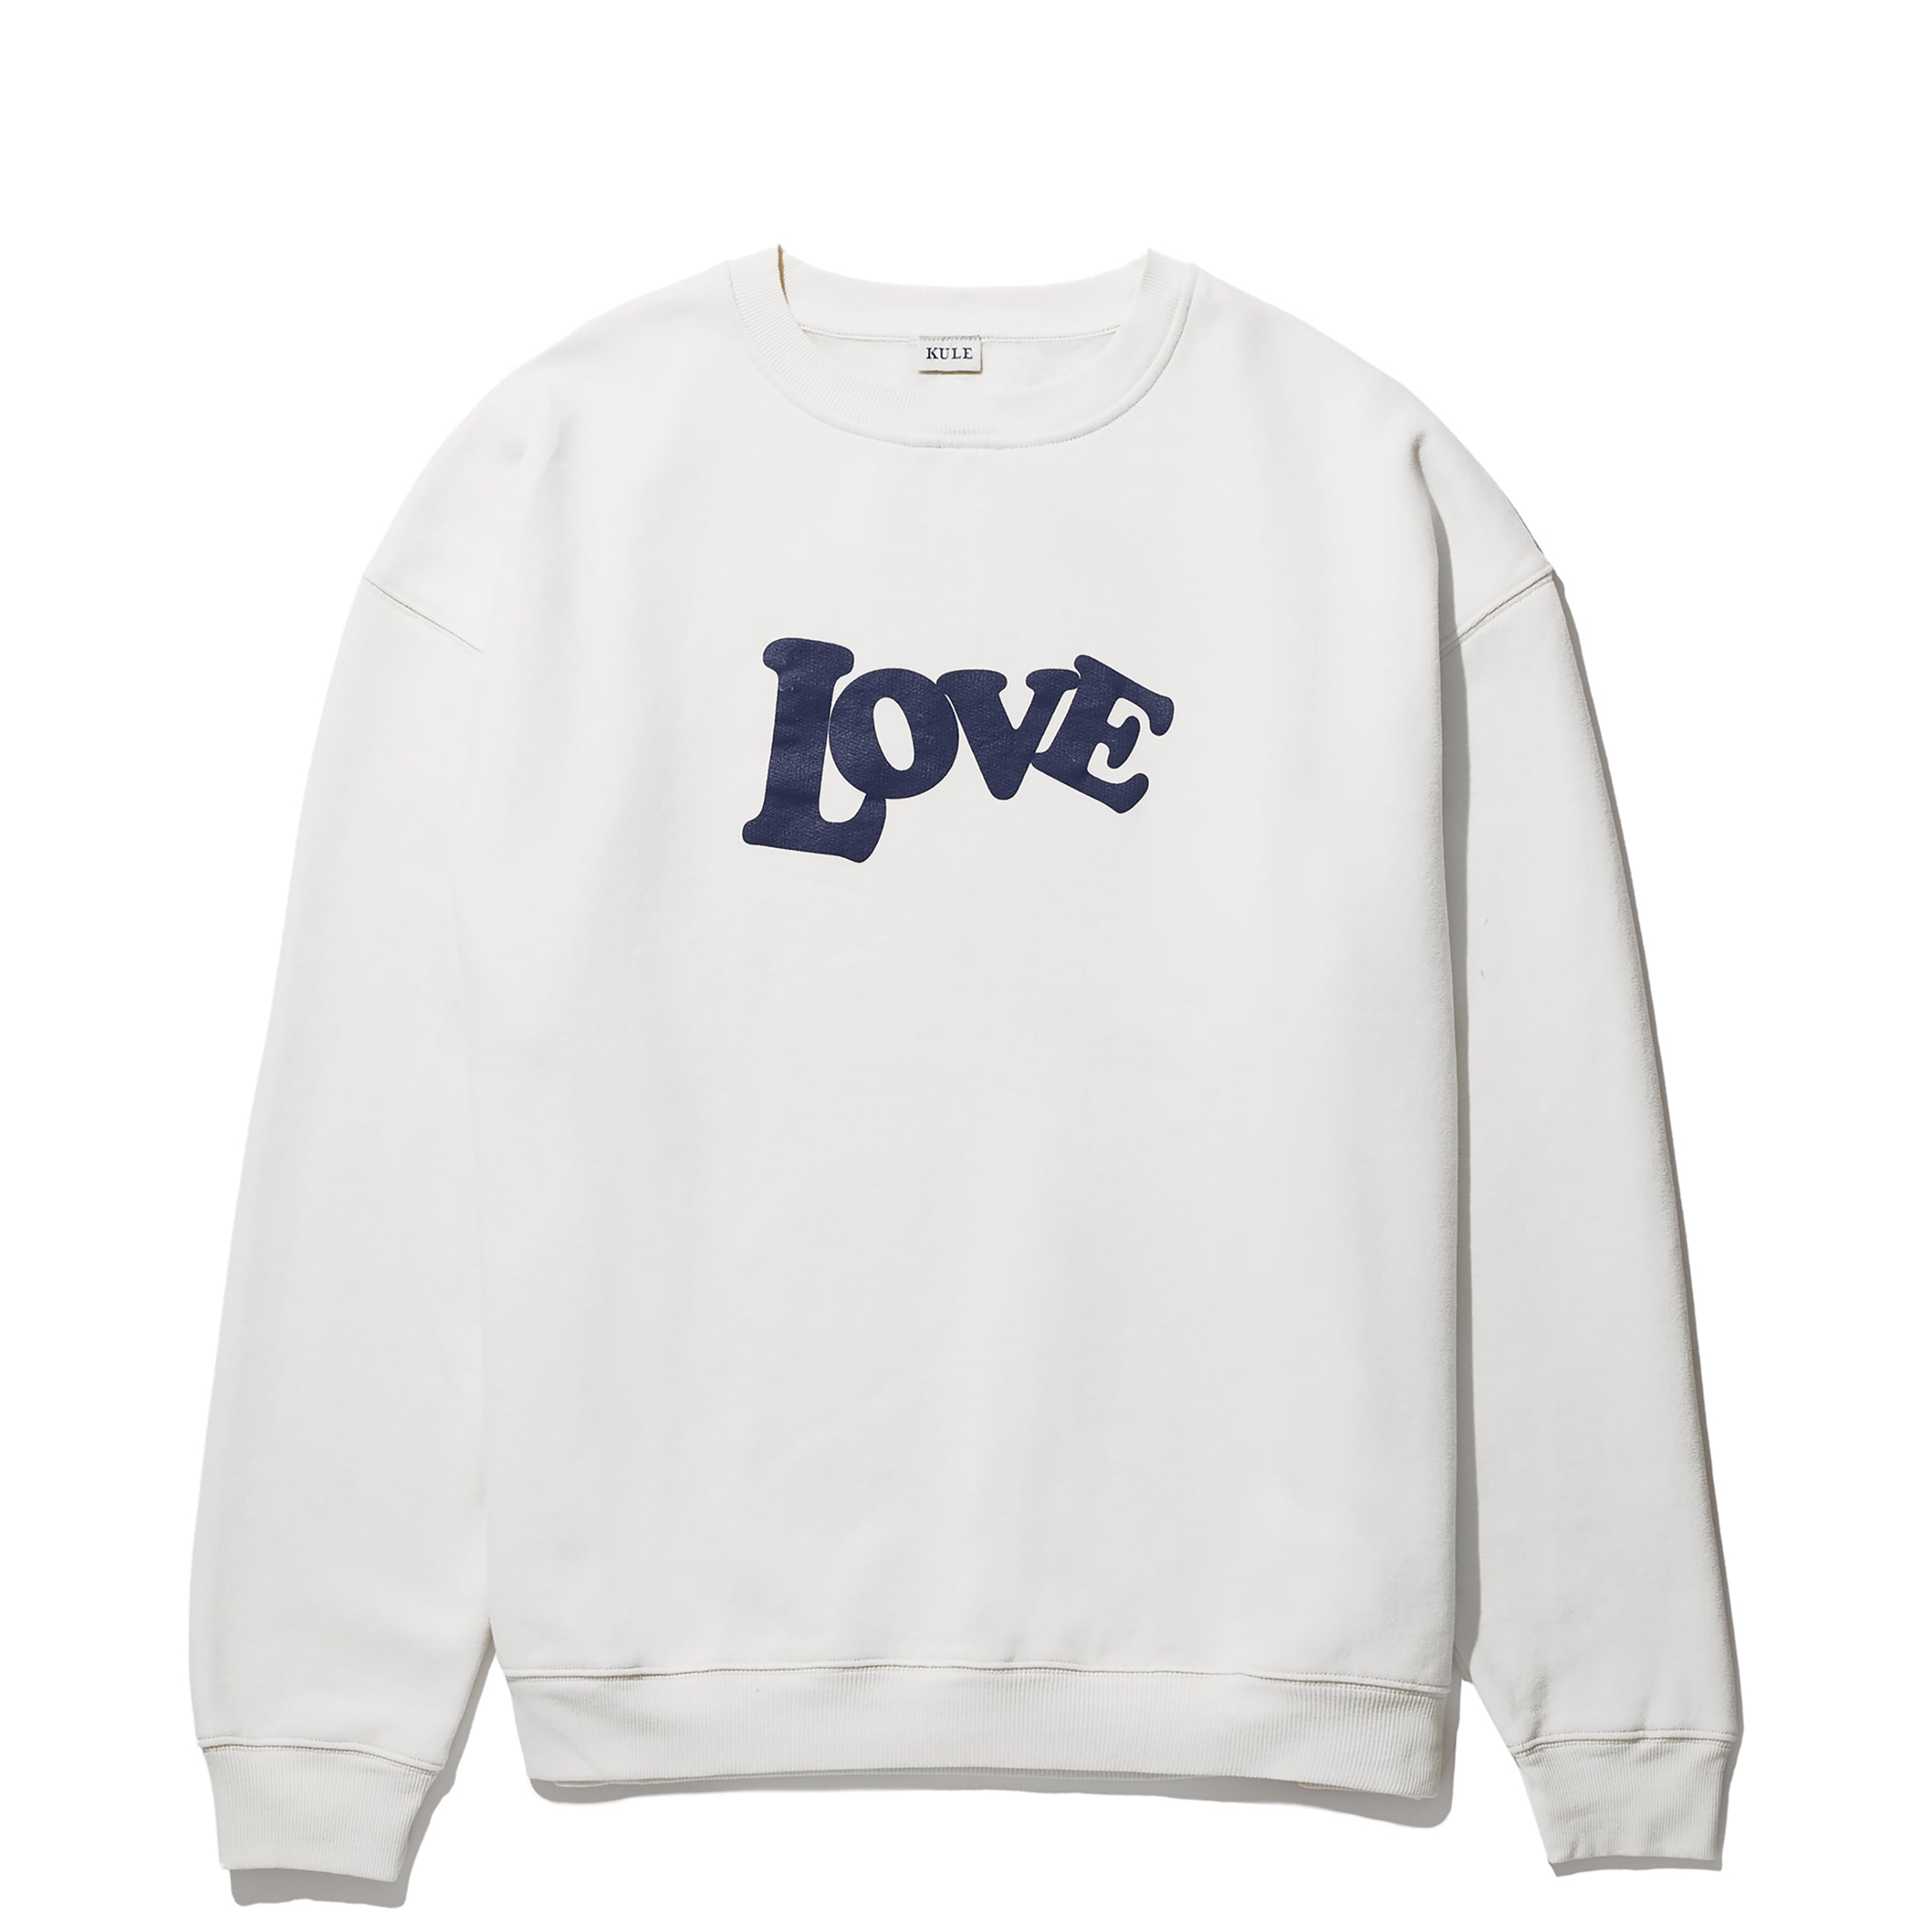 The Oversized All Over Heart Sweatshirt - Heather Grey Size Xs by KULE